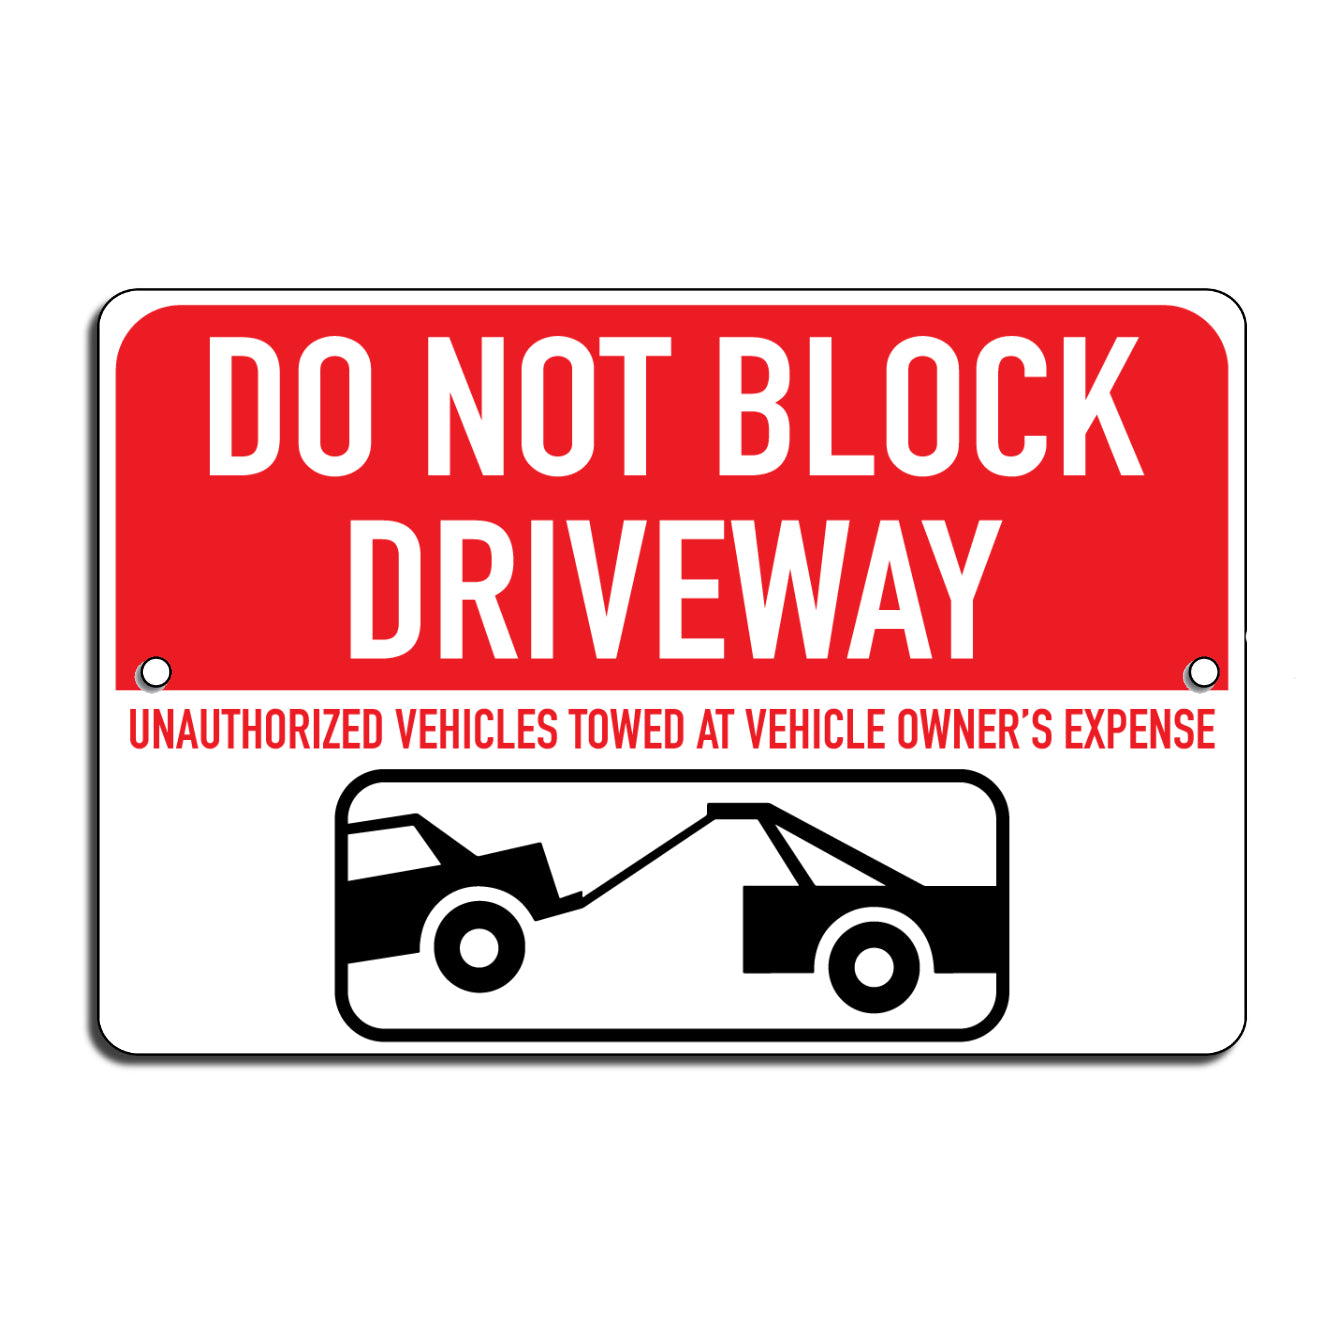 Do Not Block Driveway Sign, 12 x 18 inch, Aluminum or Plastic